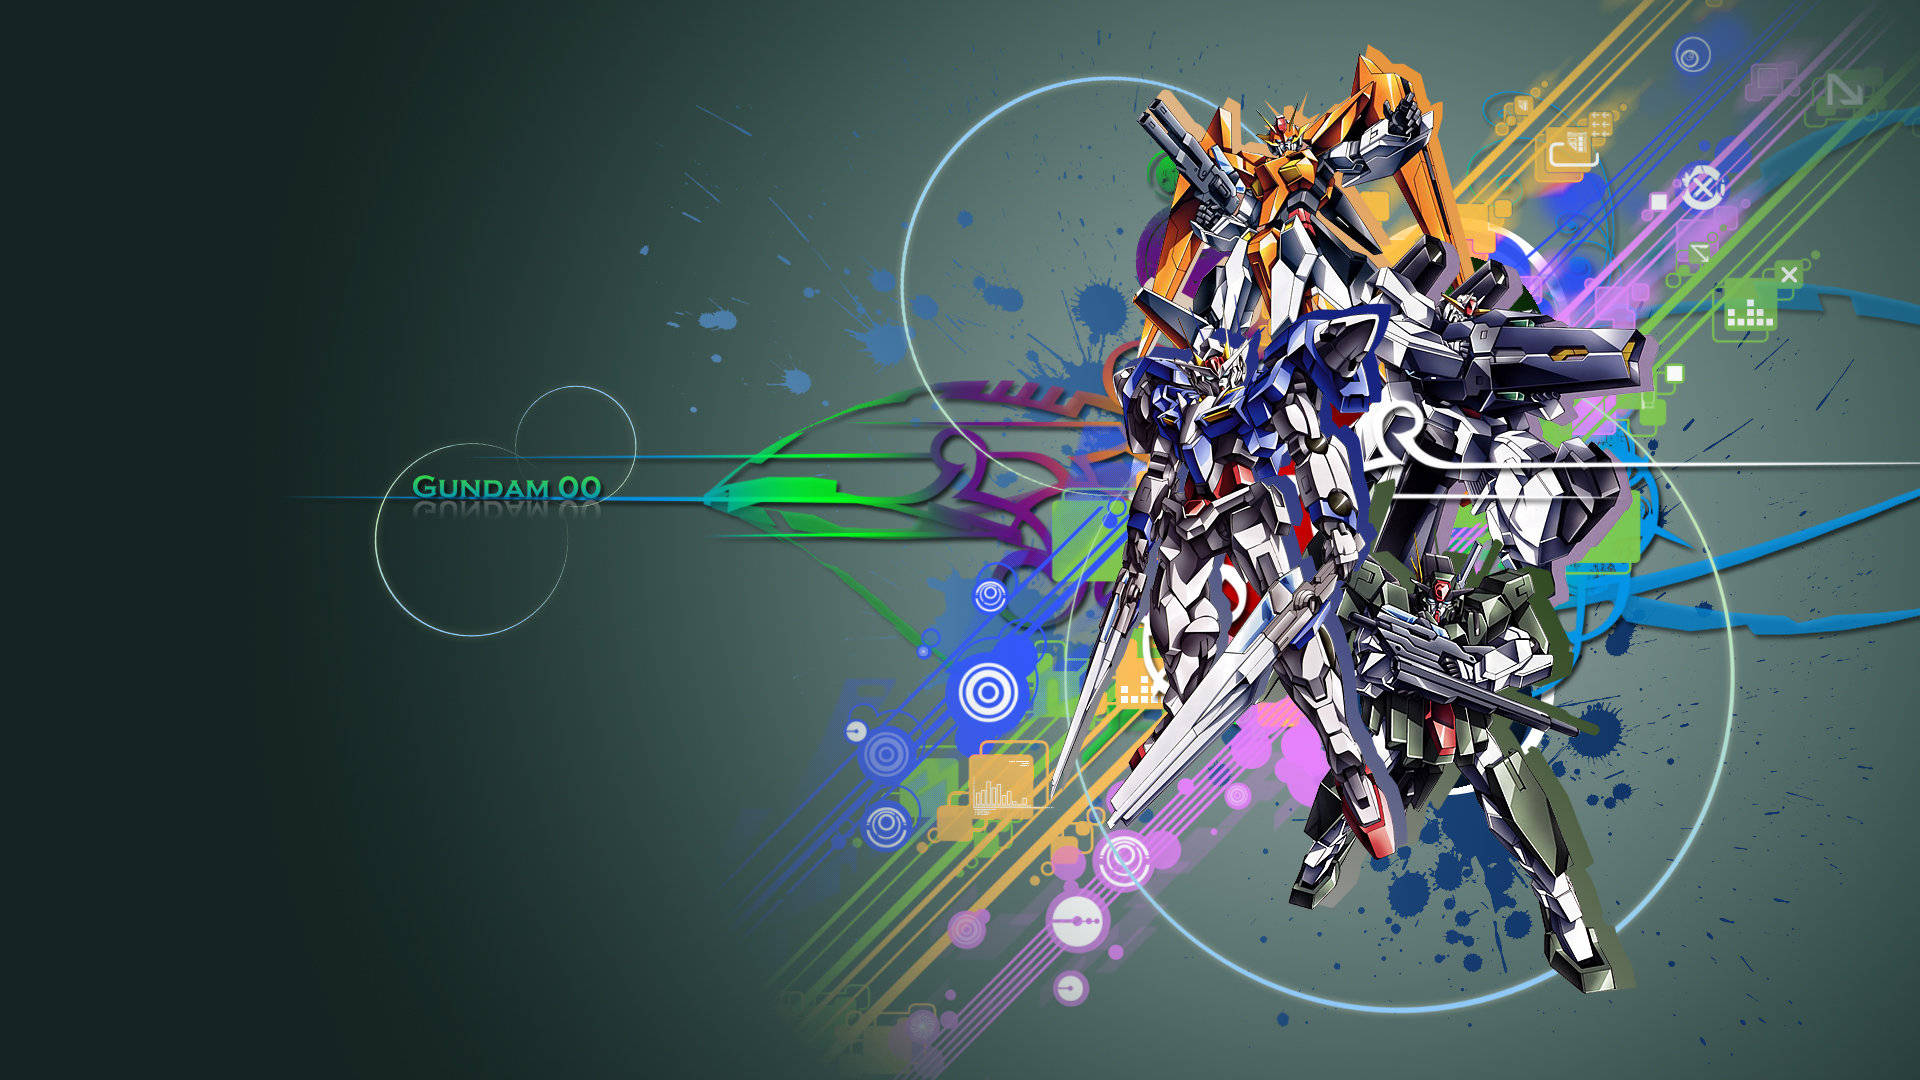 Gundam 1920X1080 Wallpaper and Background Image